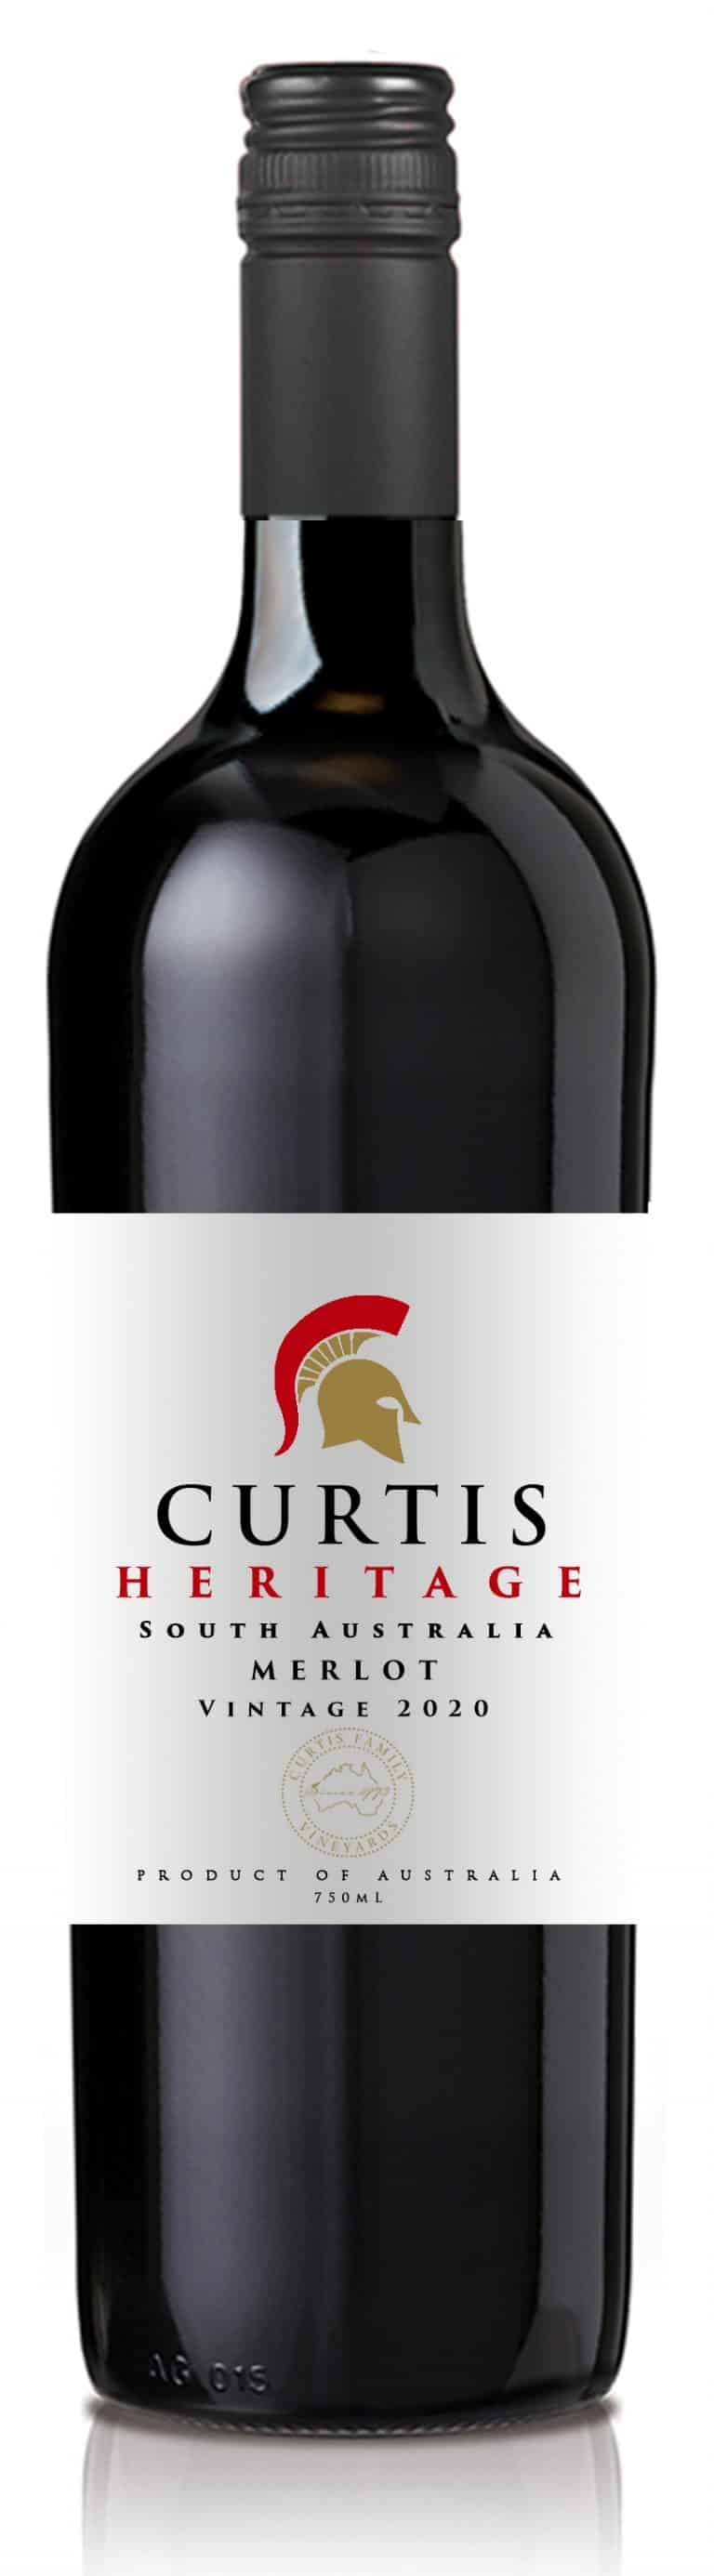 CFV heritage merlot new version bottle shot copy